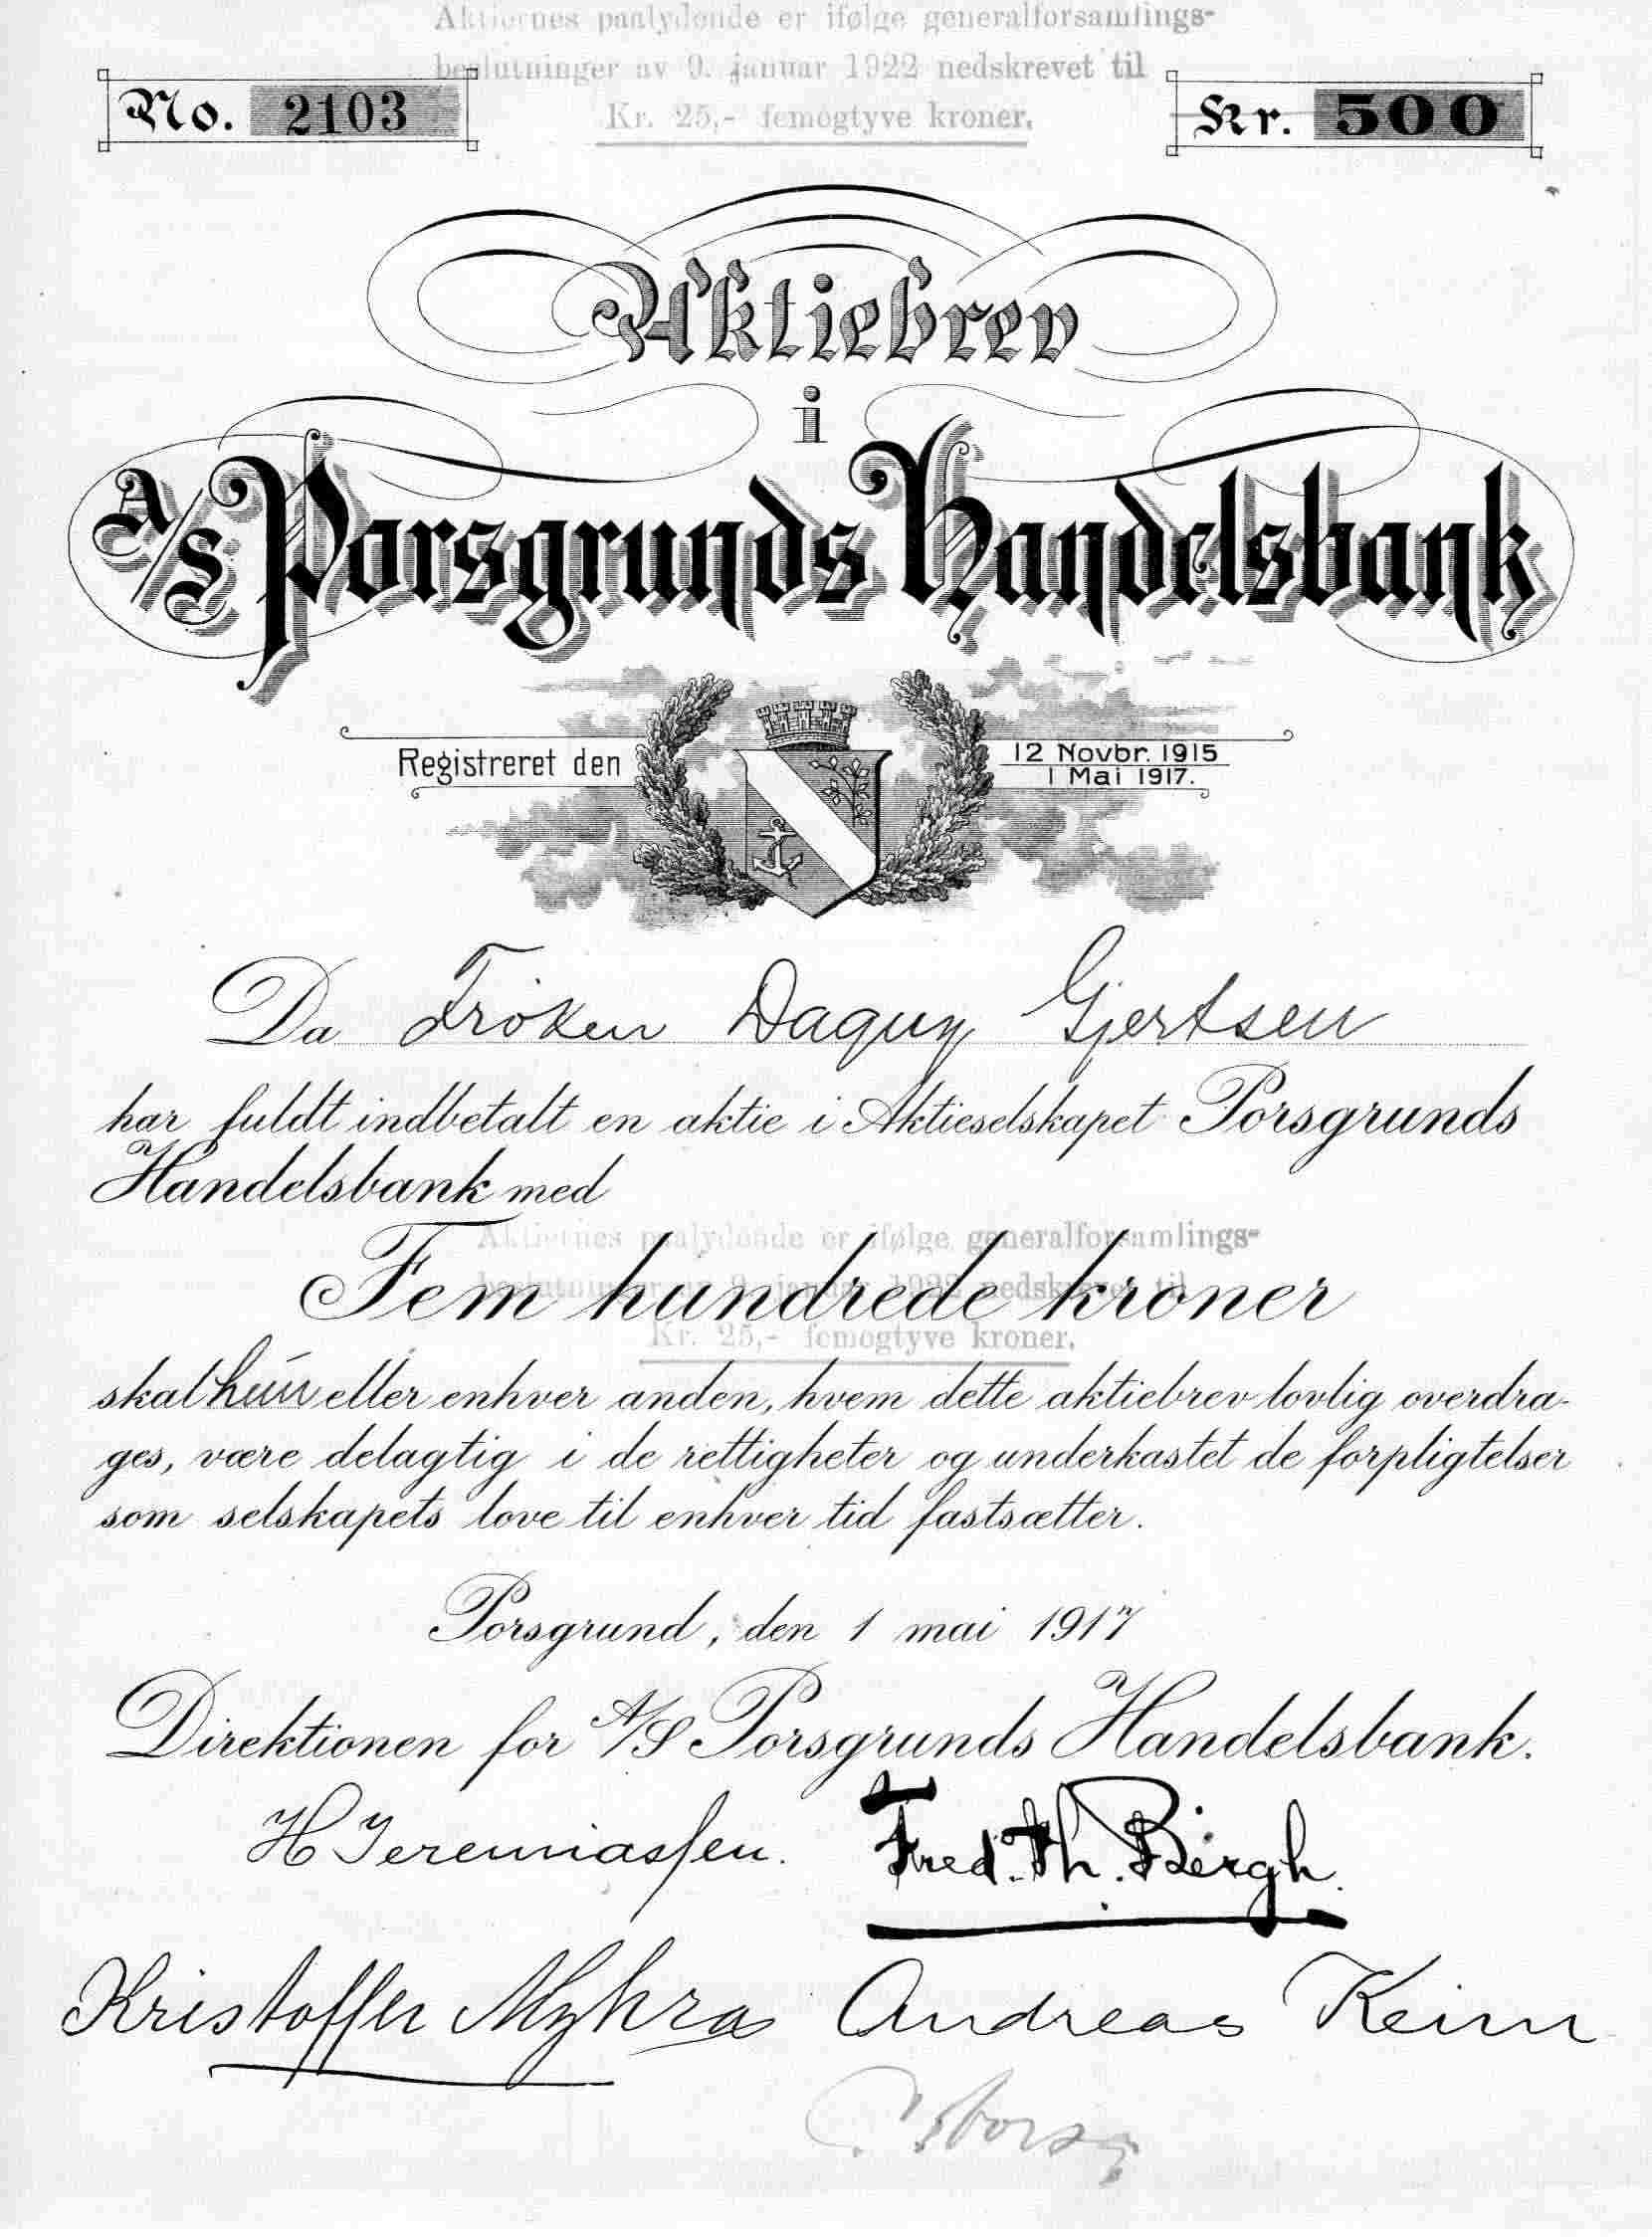 Porsgrunds handelsbank no 2103 kr 500/25 Porsgrund 1916